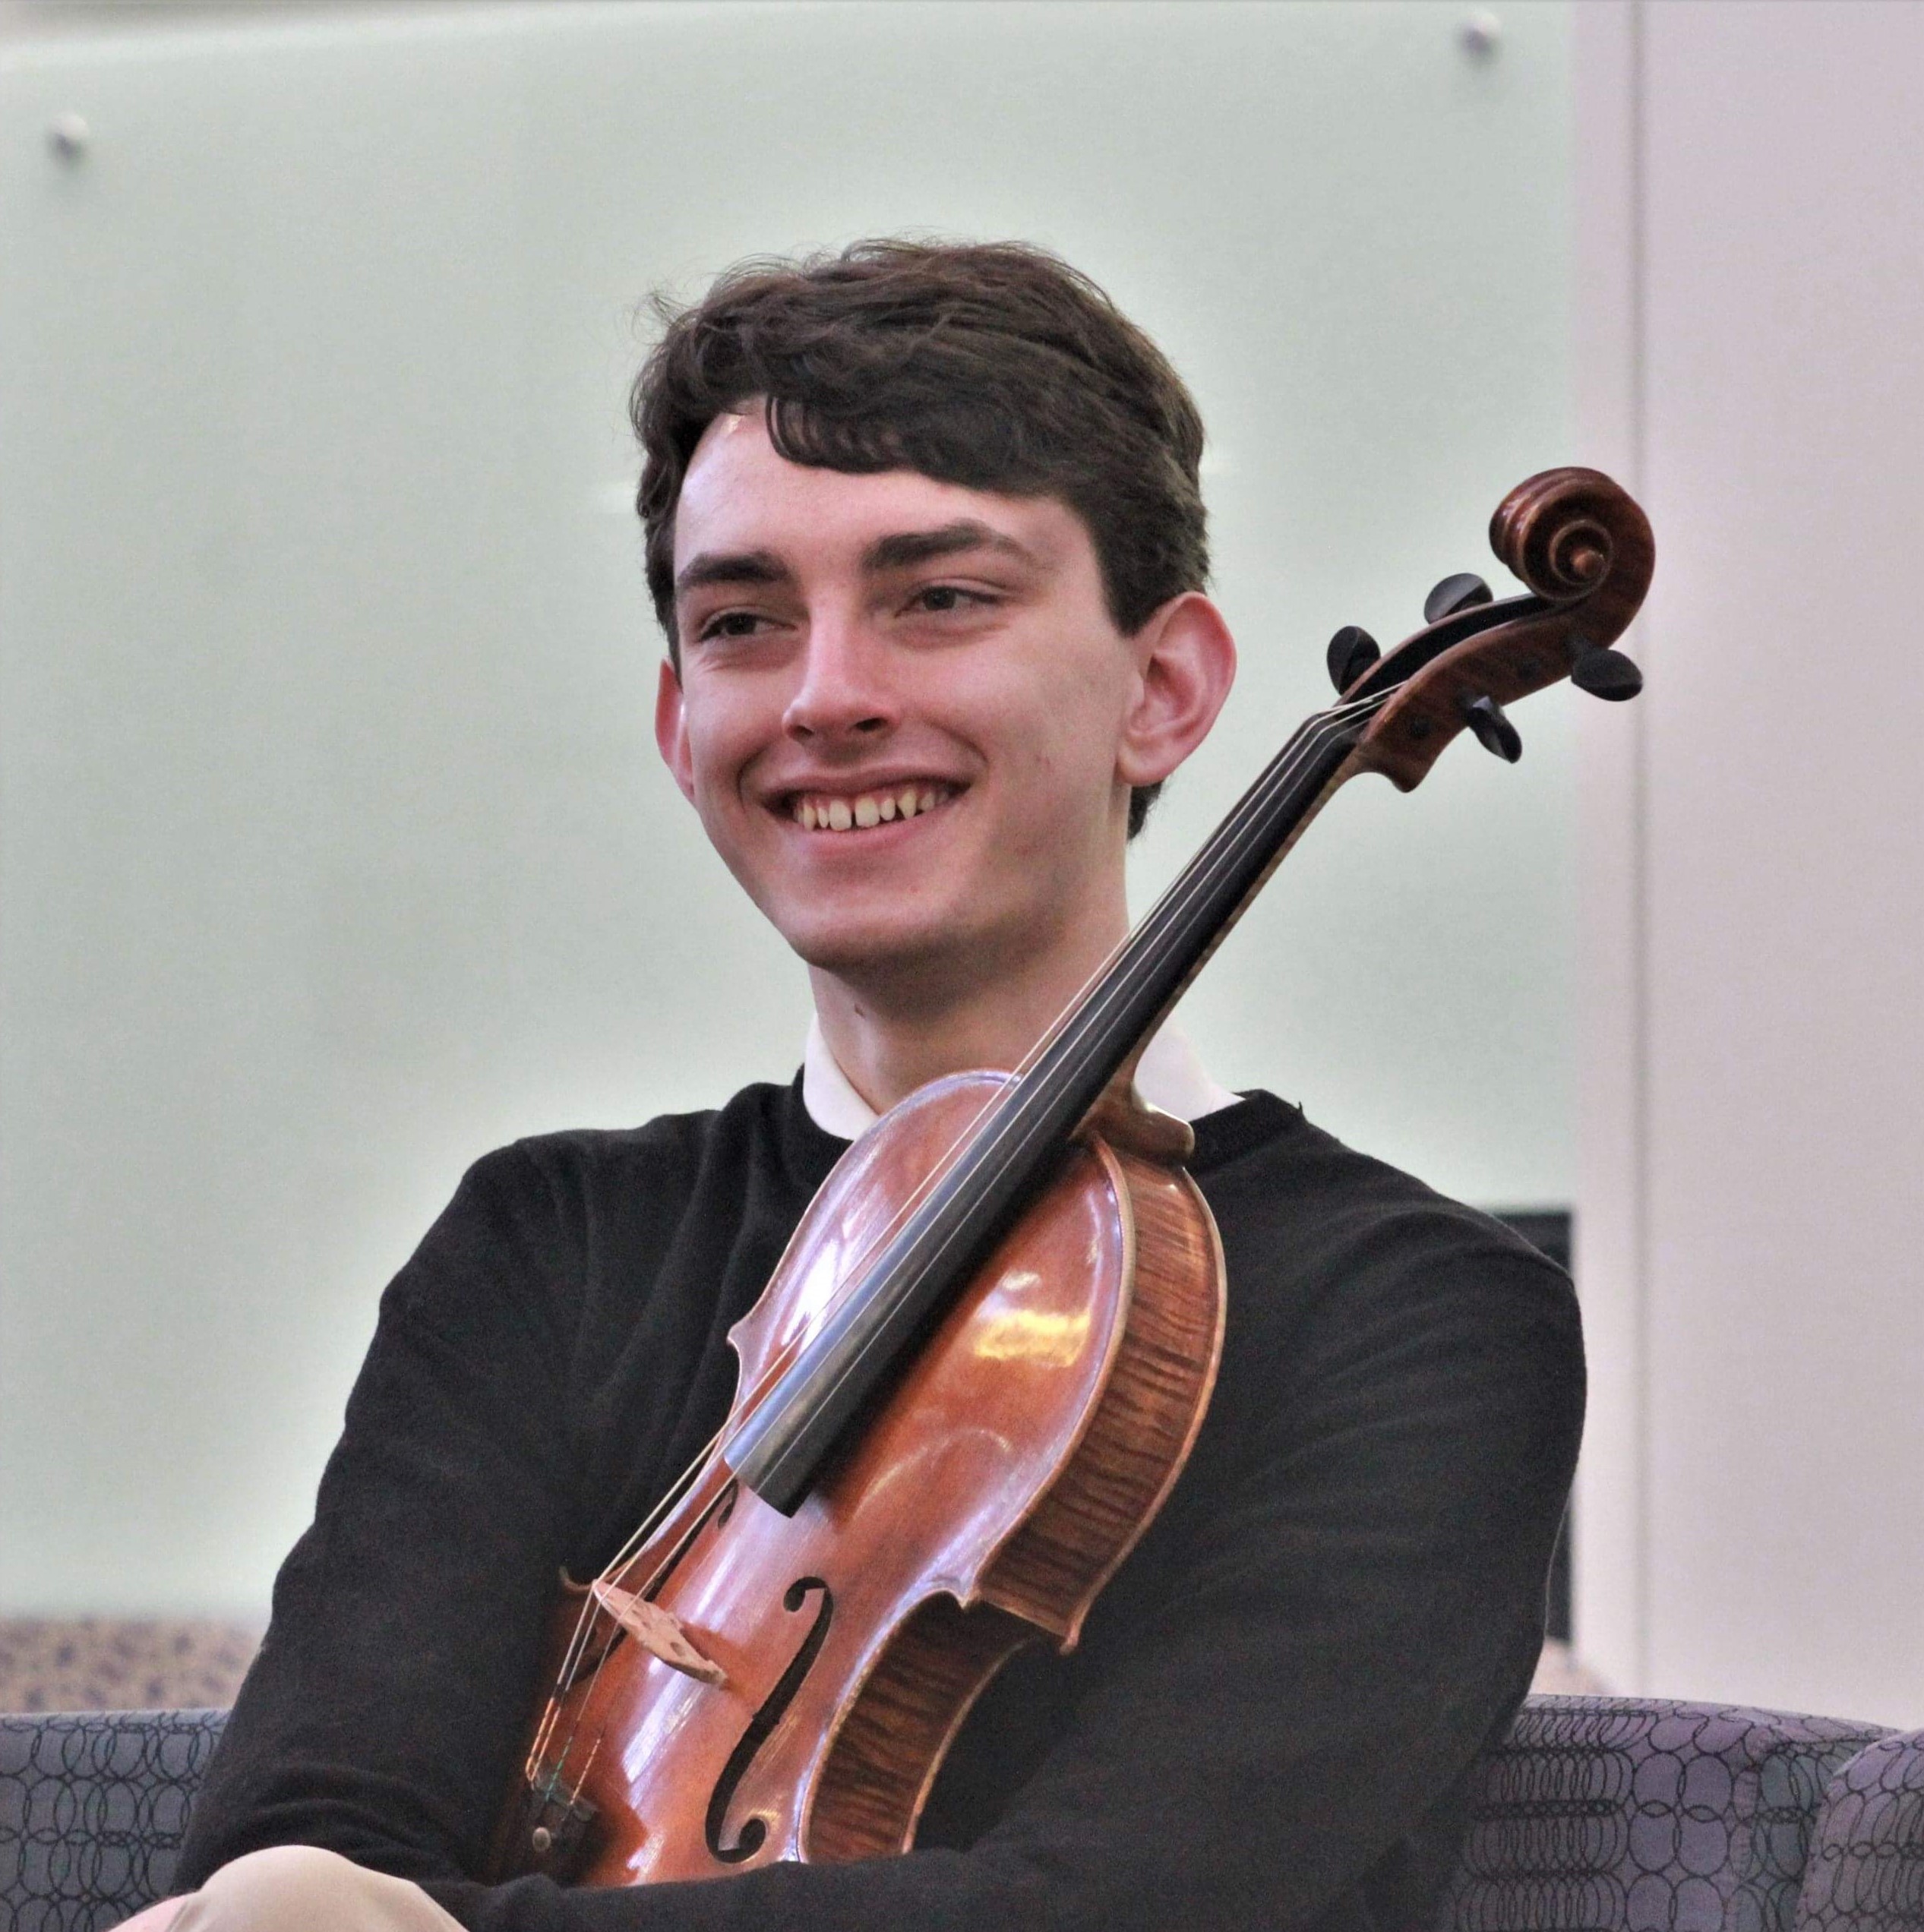 Student violinist